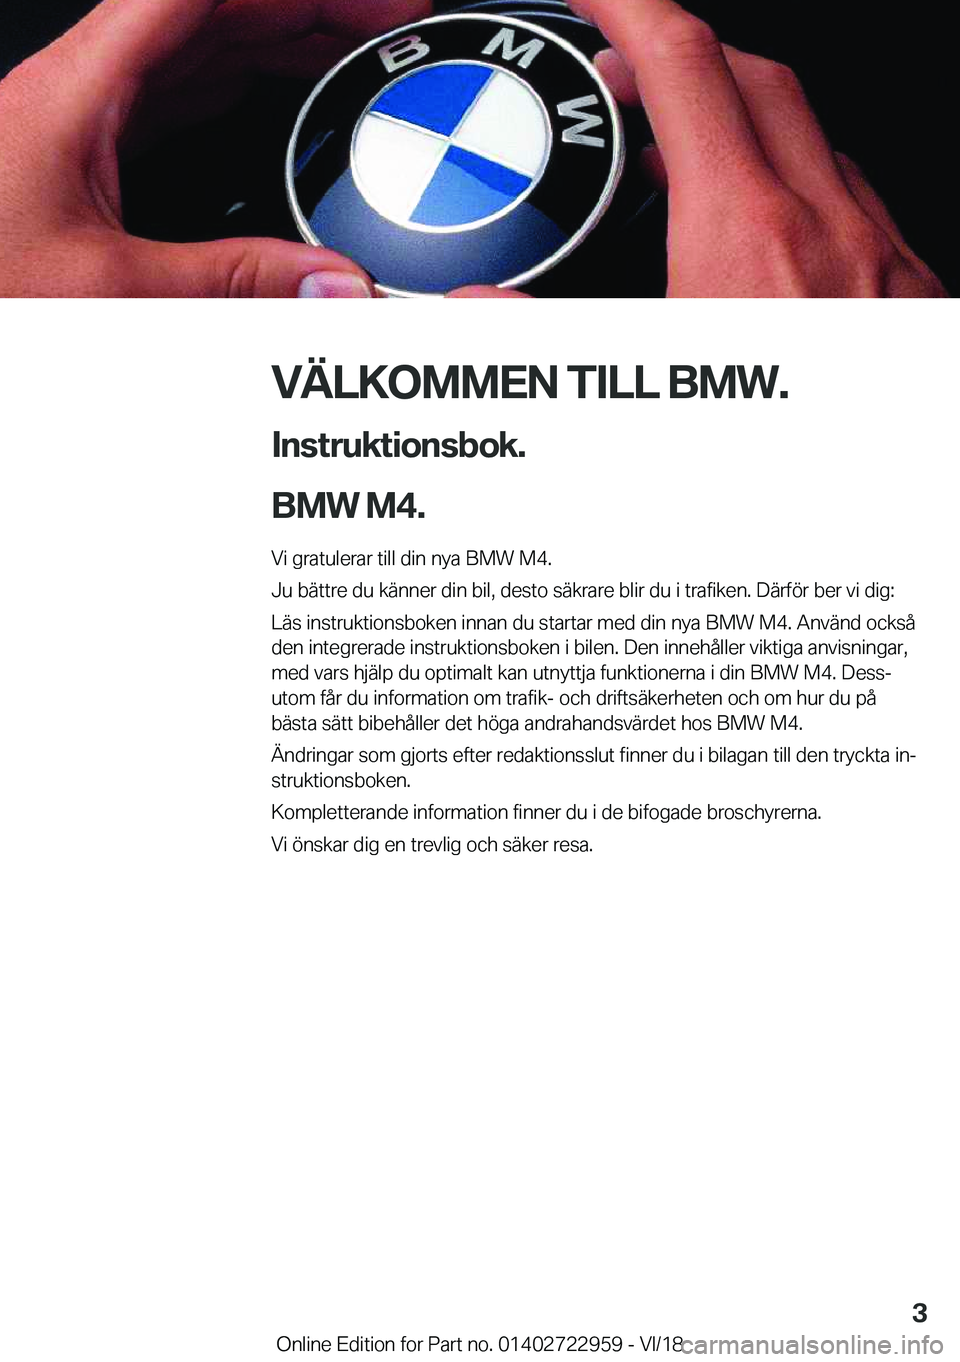 BMW M4 2019  InstruktionsbÖcker (in Swedish) �V�Ä�L�K�O�M�M�E�N��T�I�L�L��B�M�W�.�I�n�s�t�r�u�k�t�i�o�n�s�b�o�k�.
�B�M�W��M�4�.
�V�i��g�r�a�t�u�l�e�r�a�r��t�i�l�l��d�i�n��n�y�a��B�M�W��M�4�.
�J�u��b�ä�t�t�r�e��d�u��k�ä�n�n�e�r��d